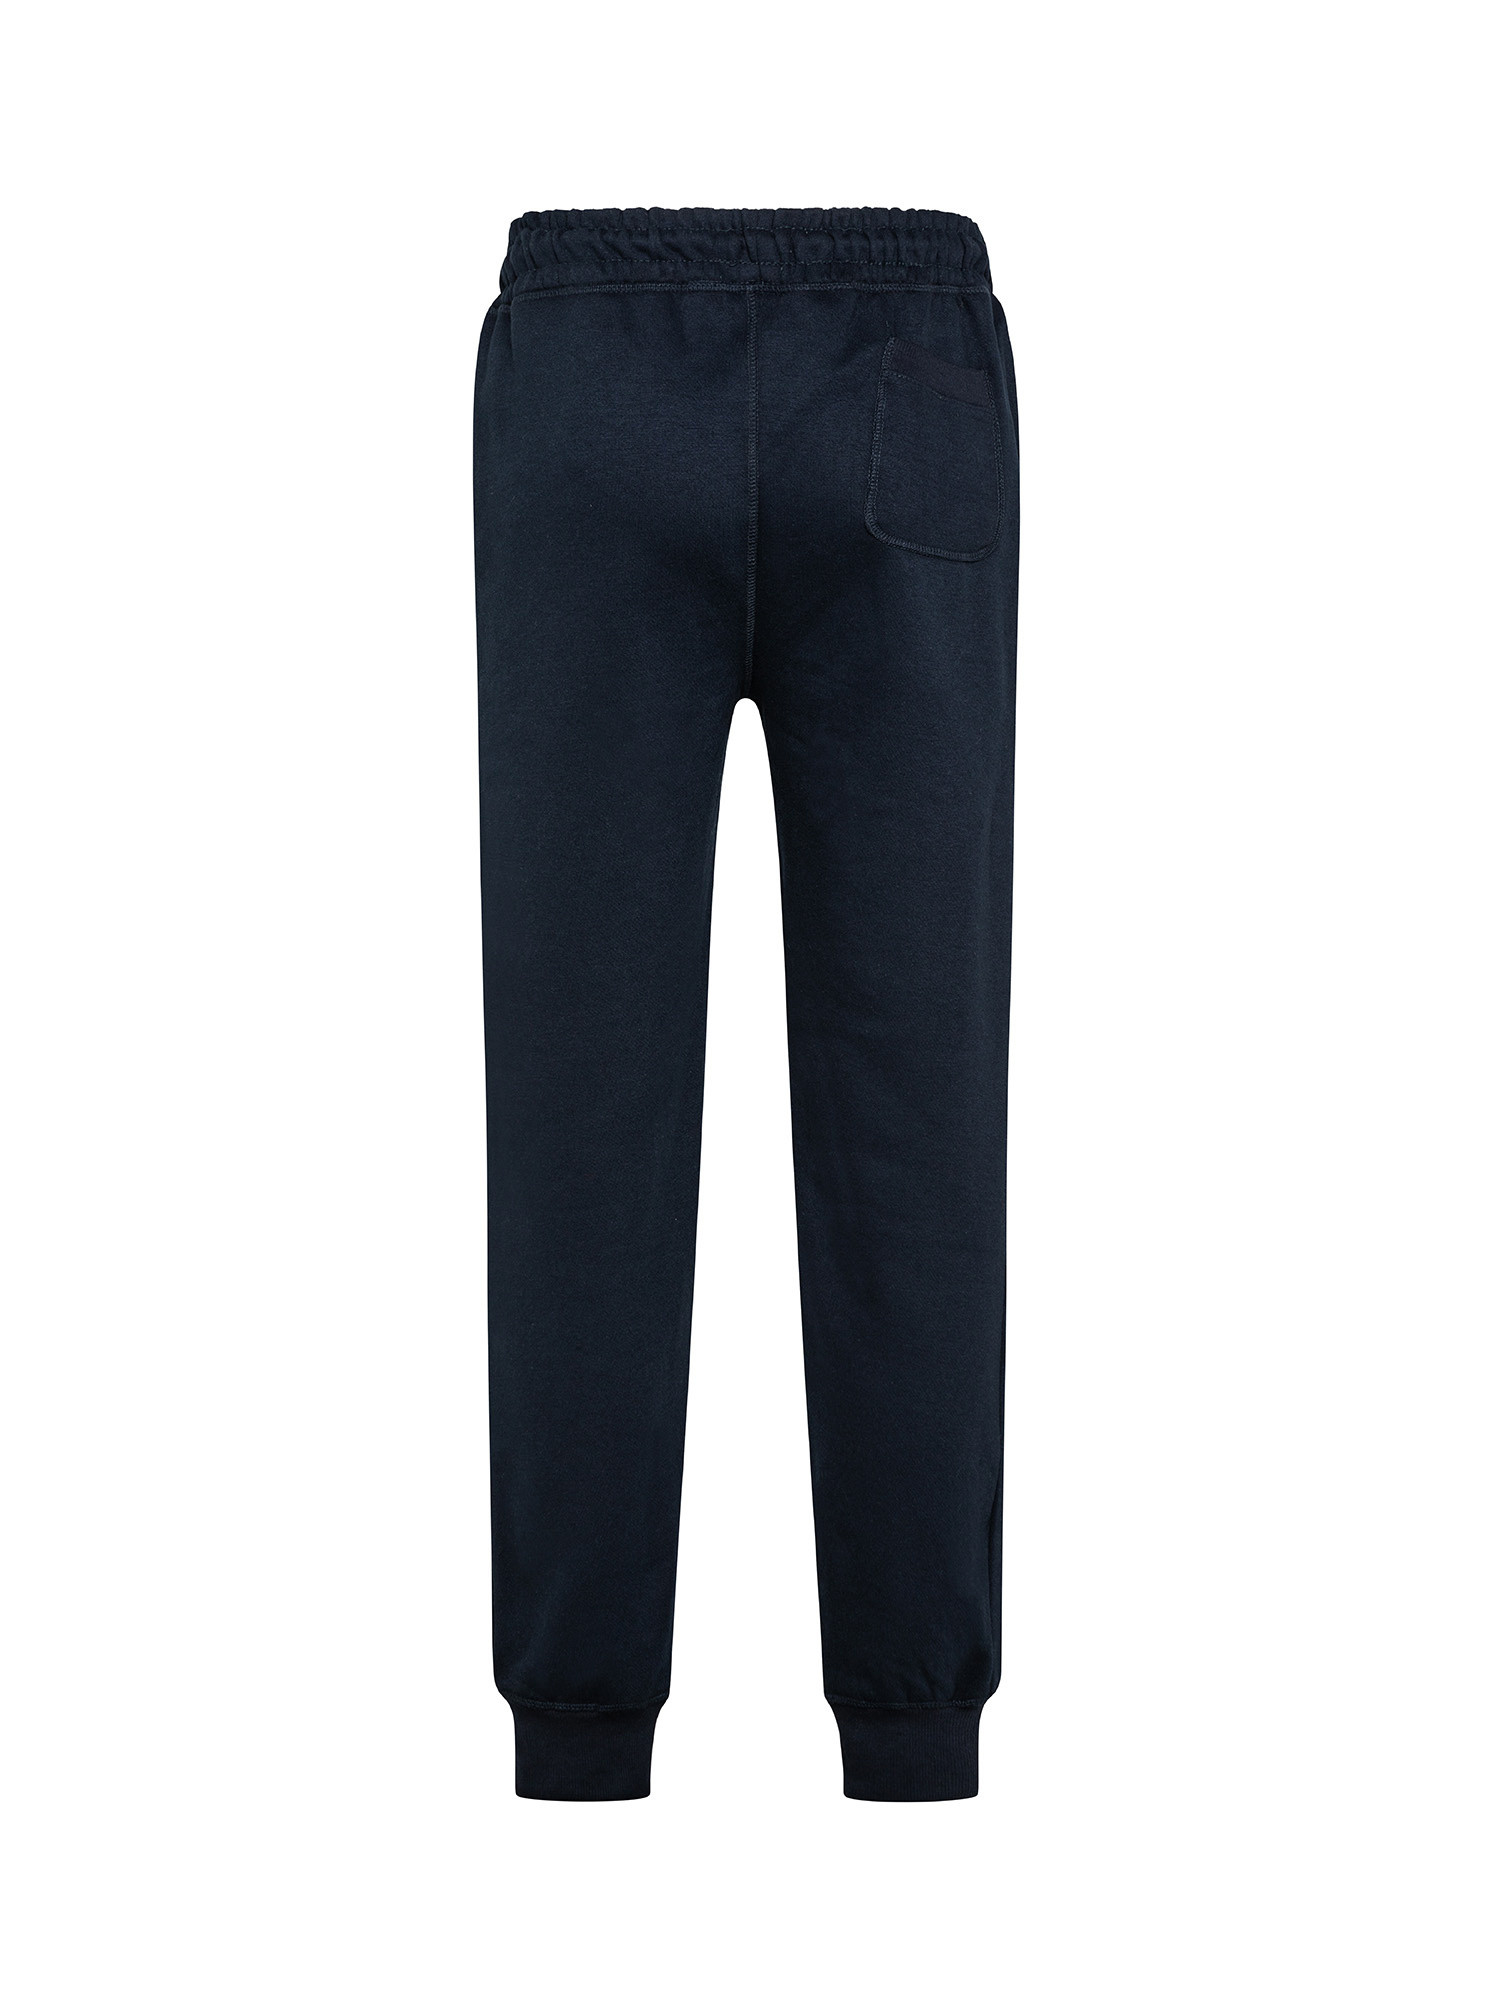 JCT - Pantalone con stampa, Blu scuro, large image number 1